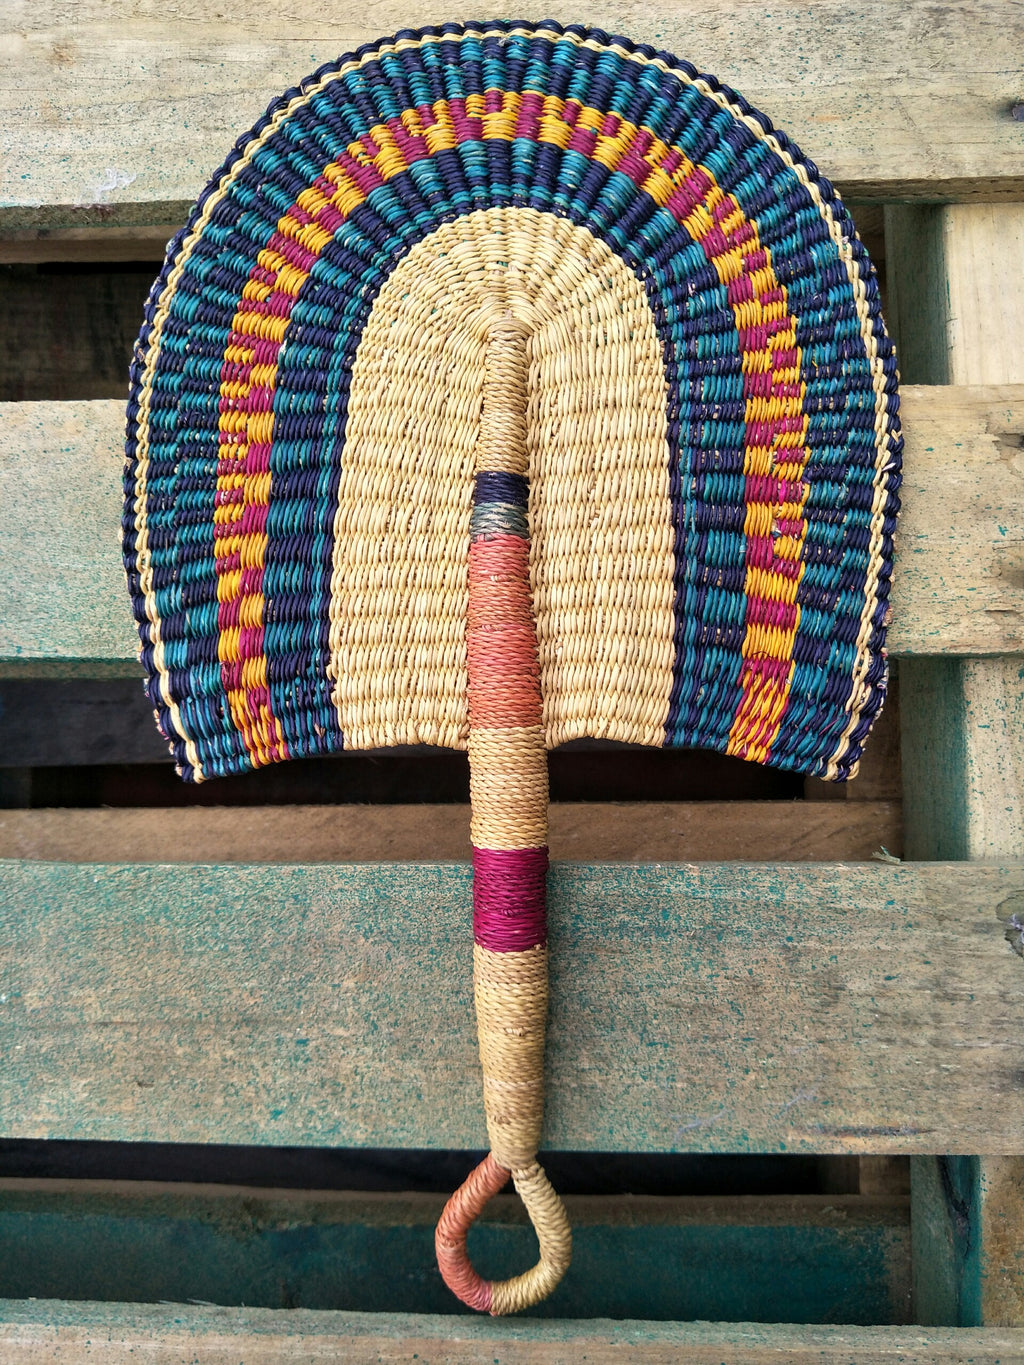 Afro-Chic Bolga Elephant Grass Straw Fan from Ghana